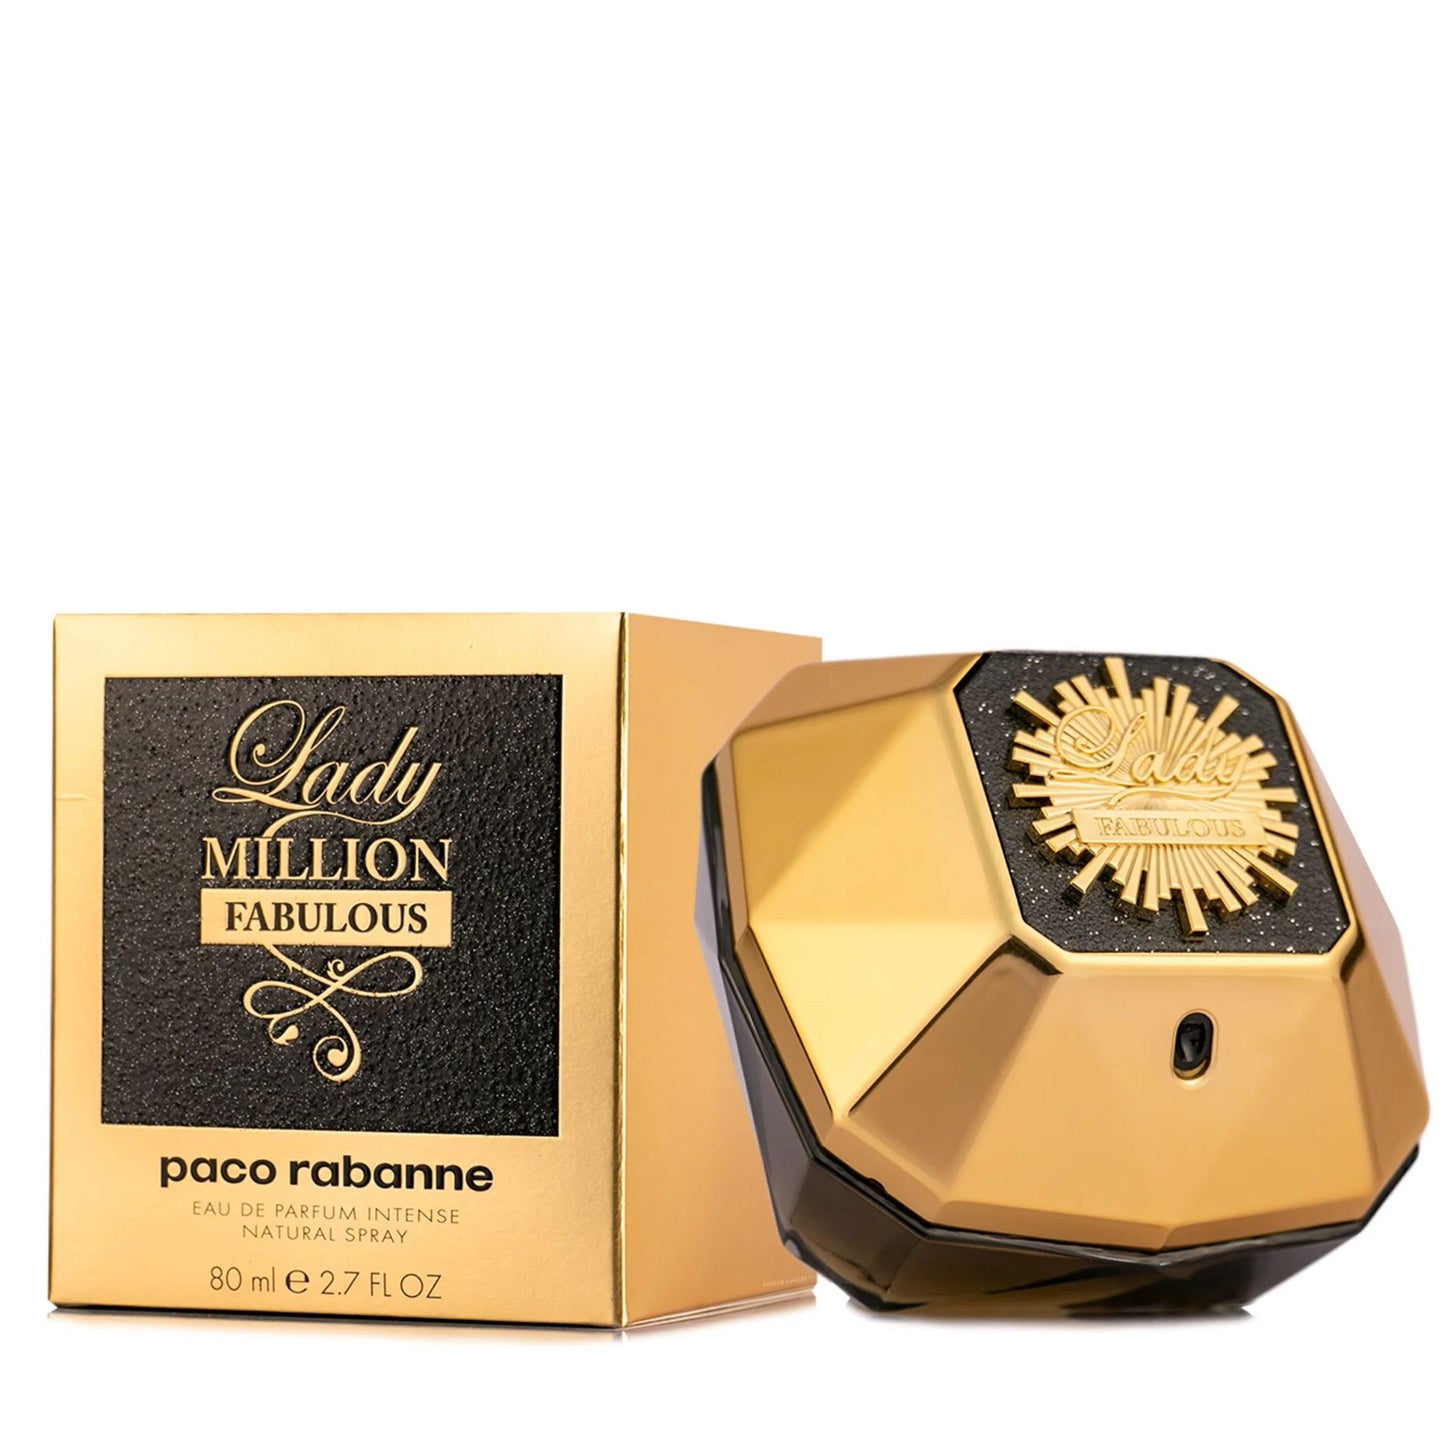 Perfume para Mujer Paco Rabanne Lady Million Fabulous 80ml EDP